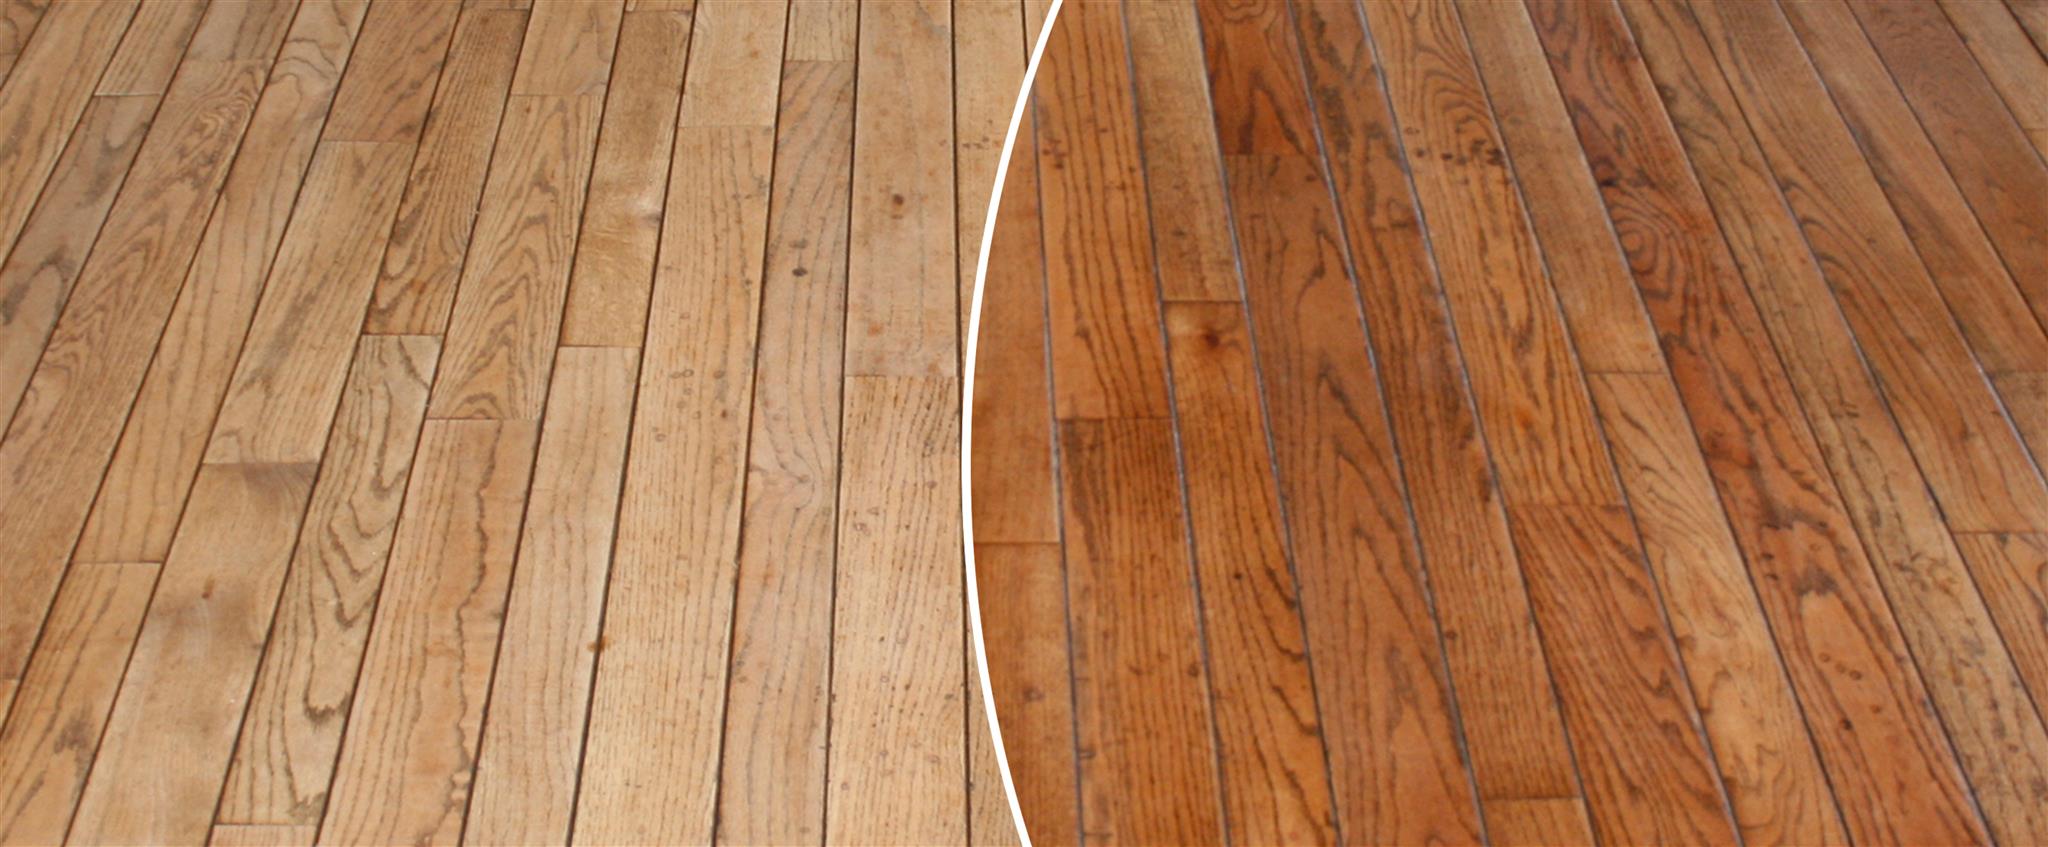 Wood Floor Refinishing Services N Hance, Hardwood Floor Refinishing Maine